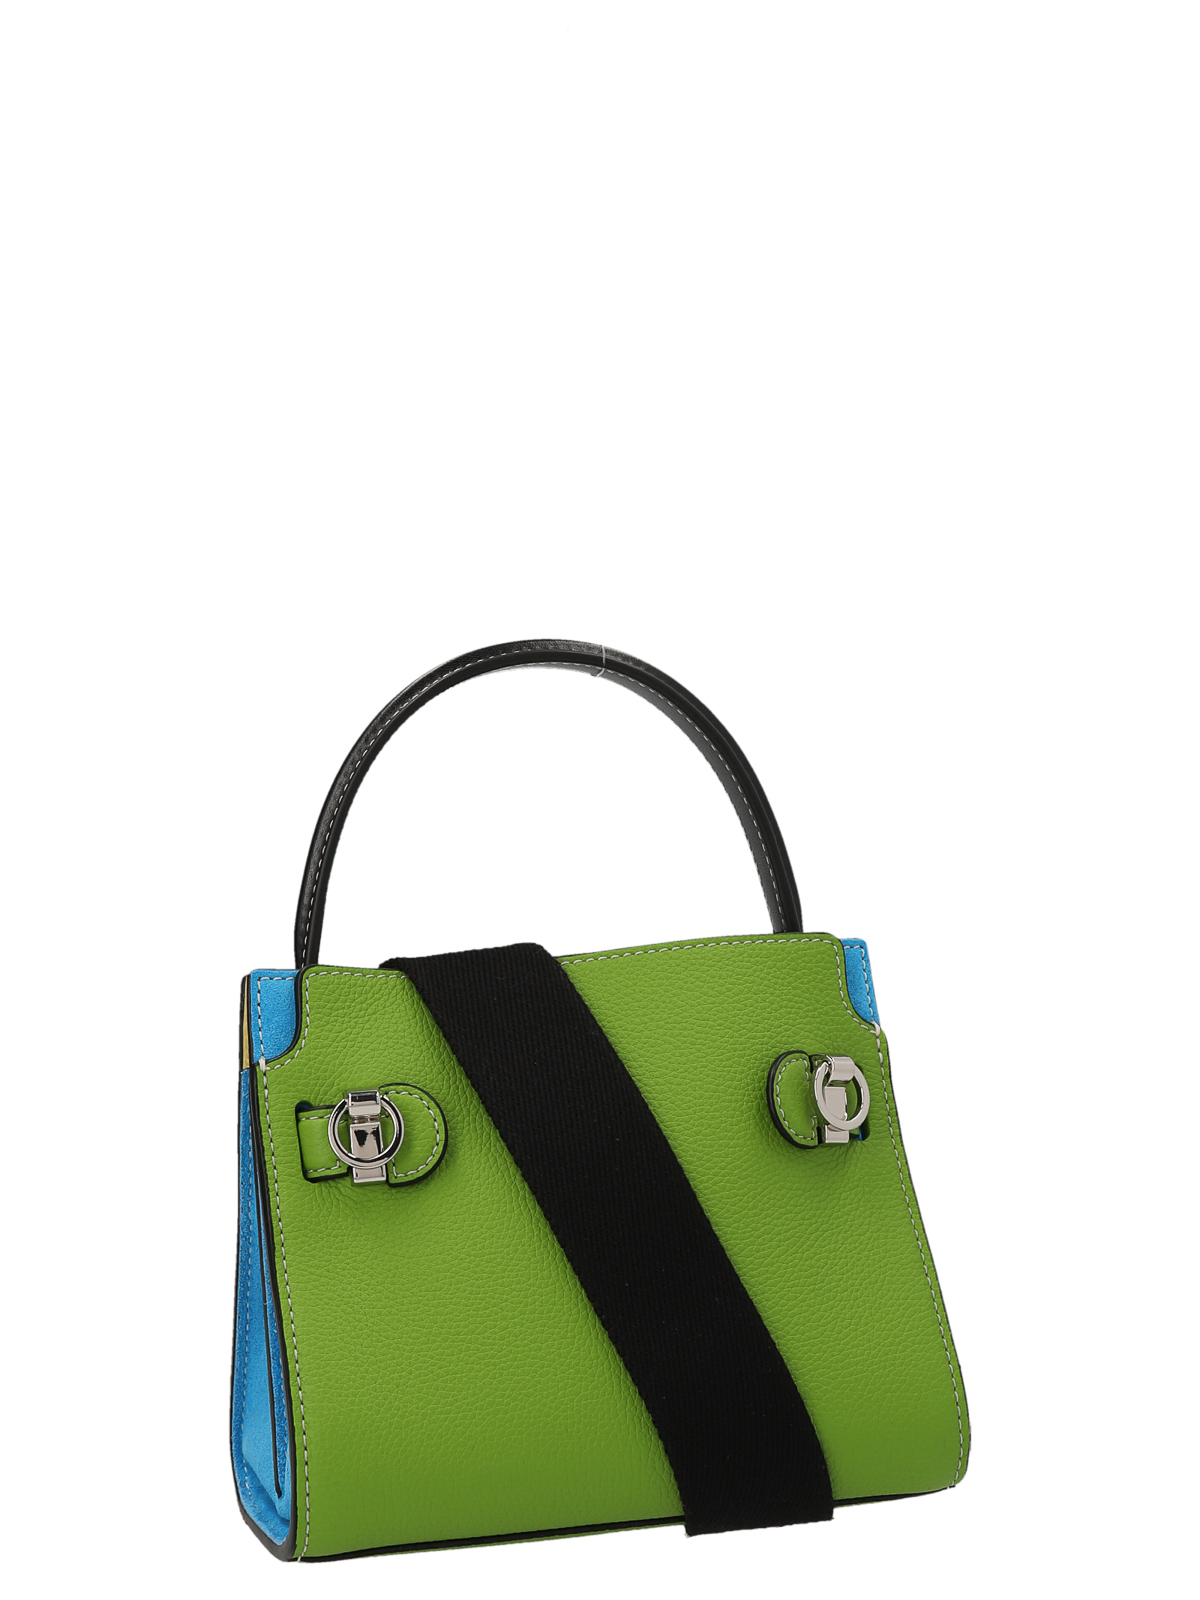 Lee radziwill petite leather handbag Tory Burch Multicolour in